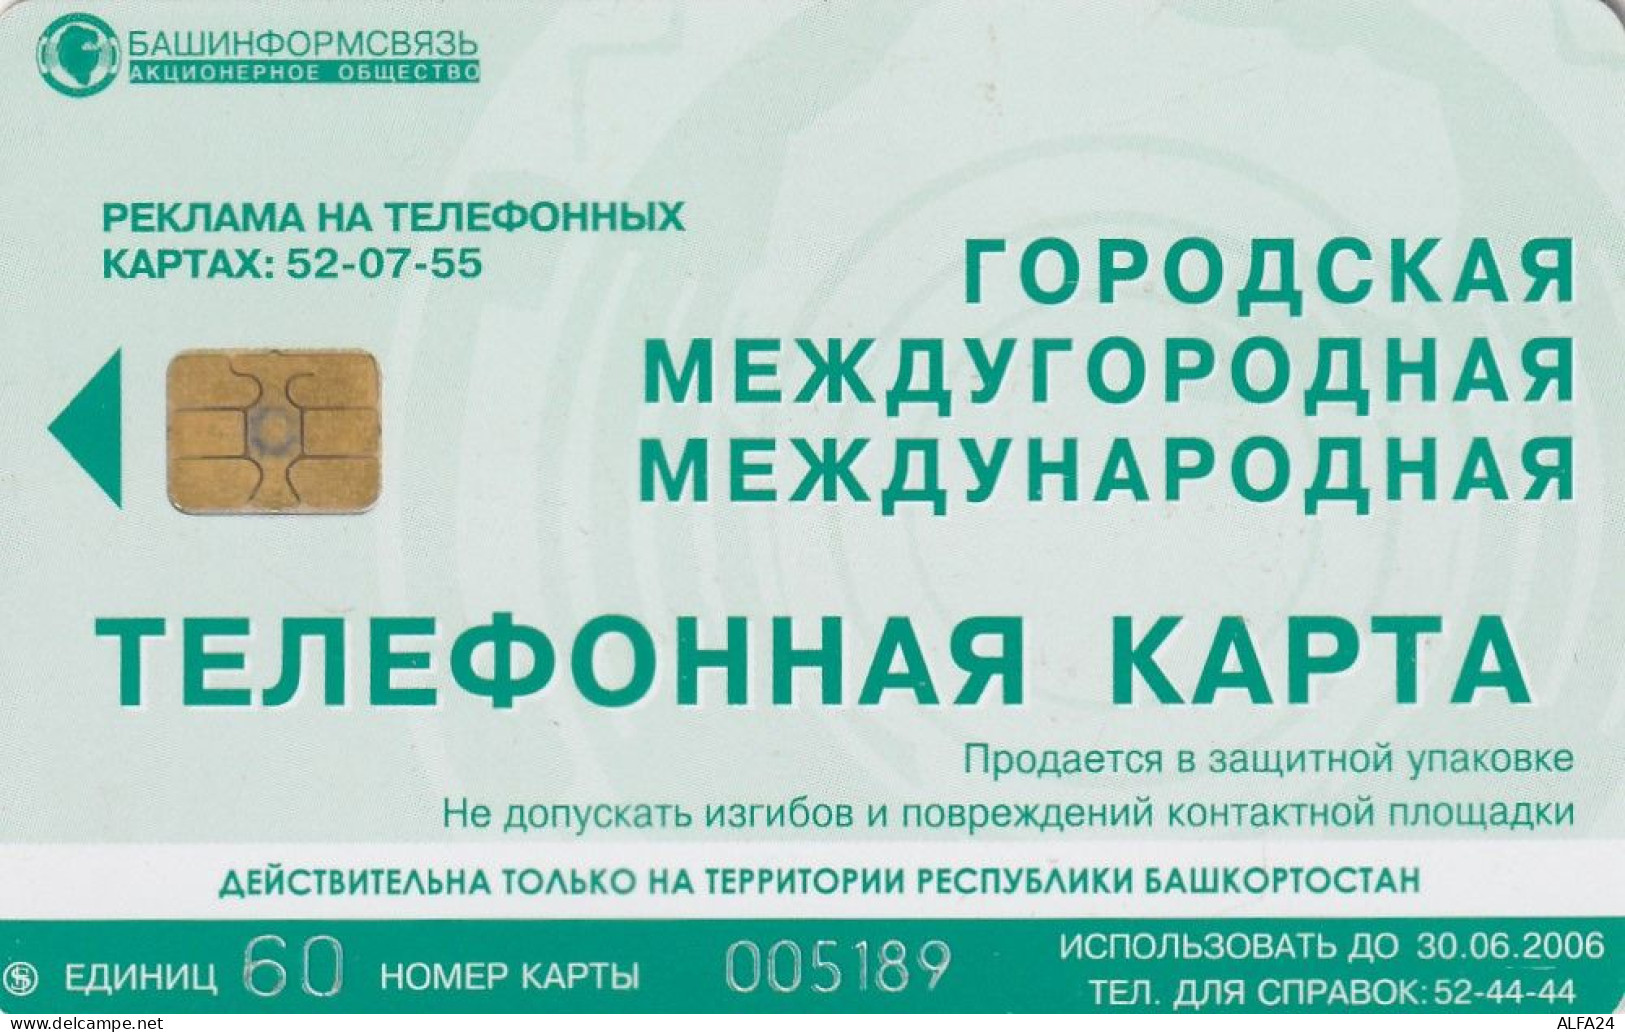 PHONE CARD RUSSIA Bashinformsvyaz - Ufa (E10.4.4 - Russie